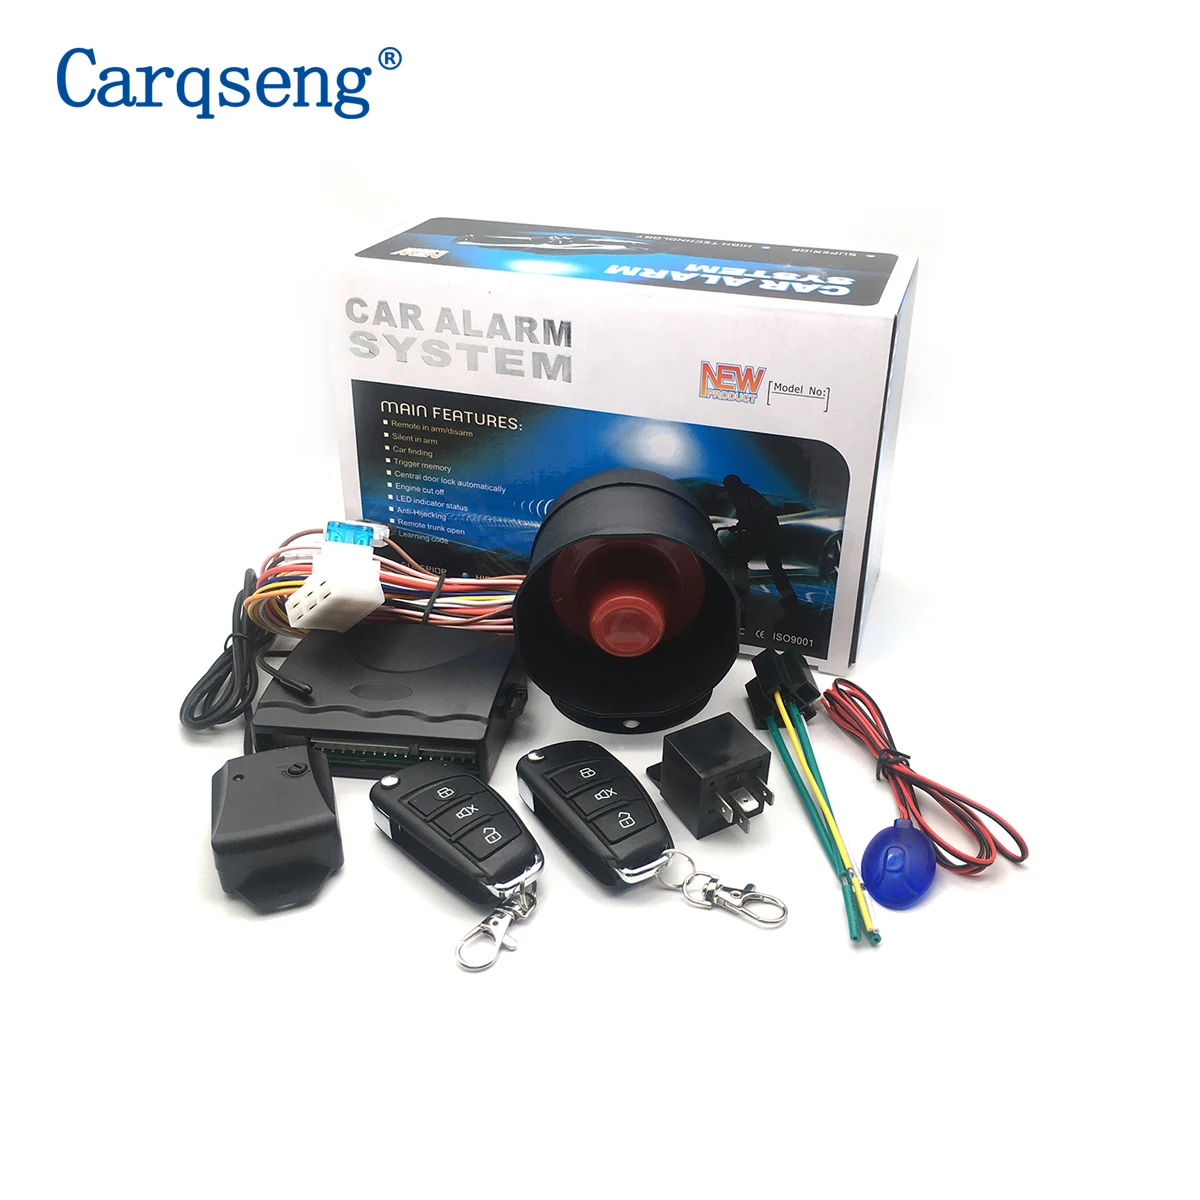 

Carqseng Car Alarms Security System Keyless Entry Siren Remote Control Burglar Alarm With Central Door Lock Unlock System